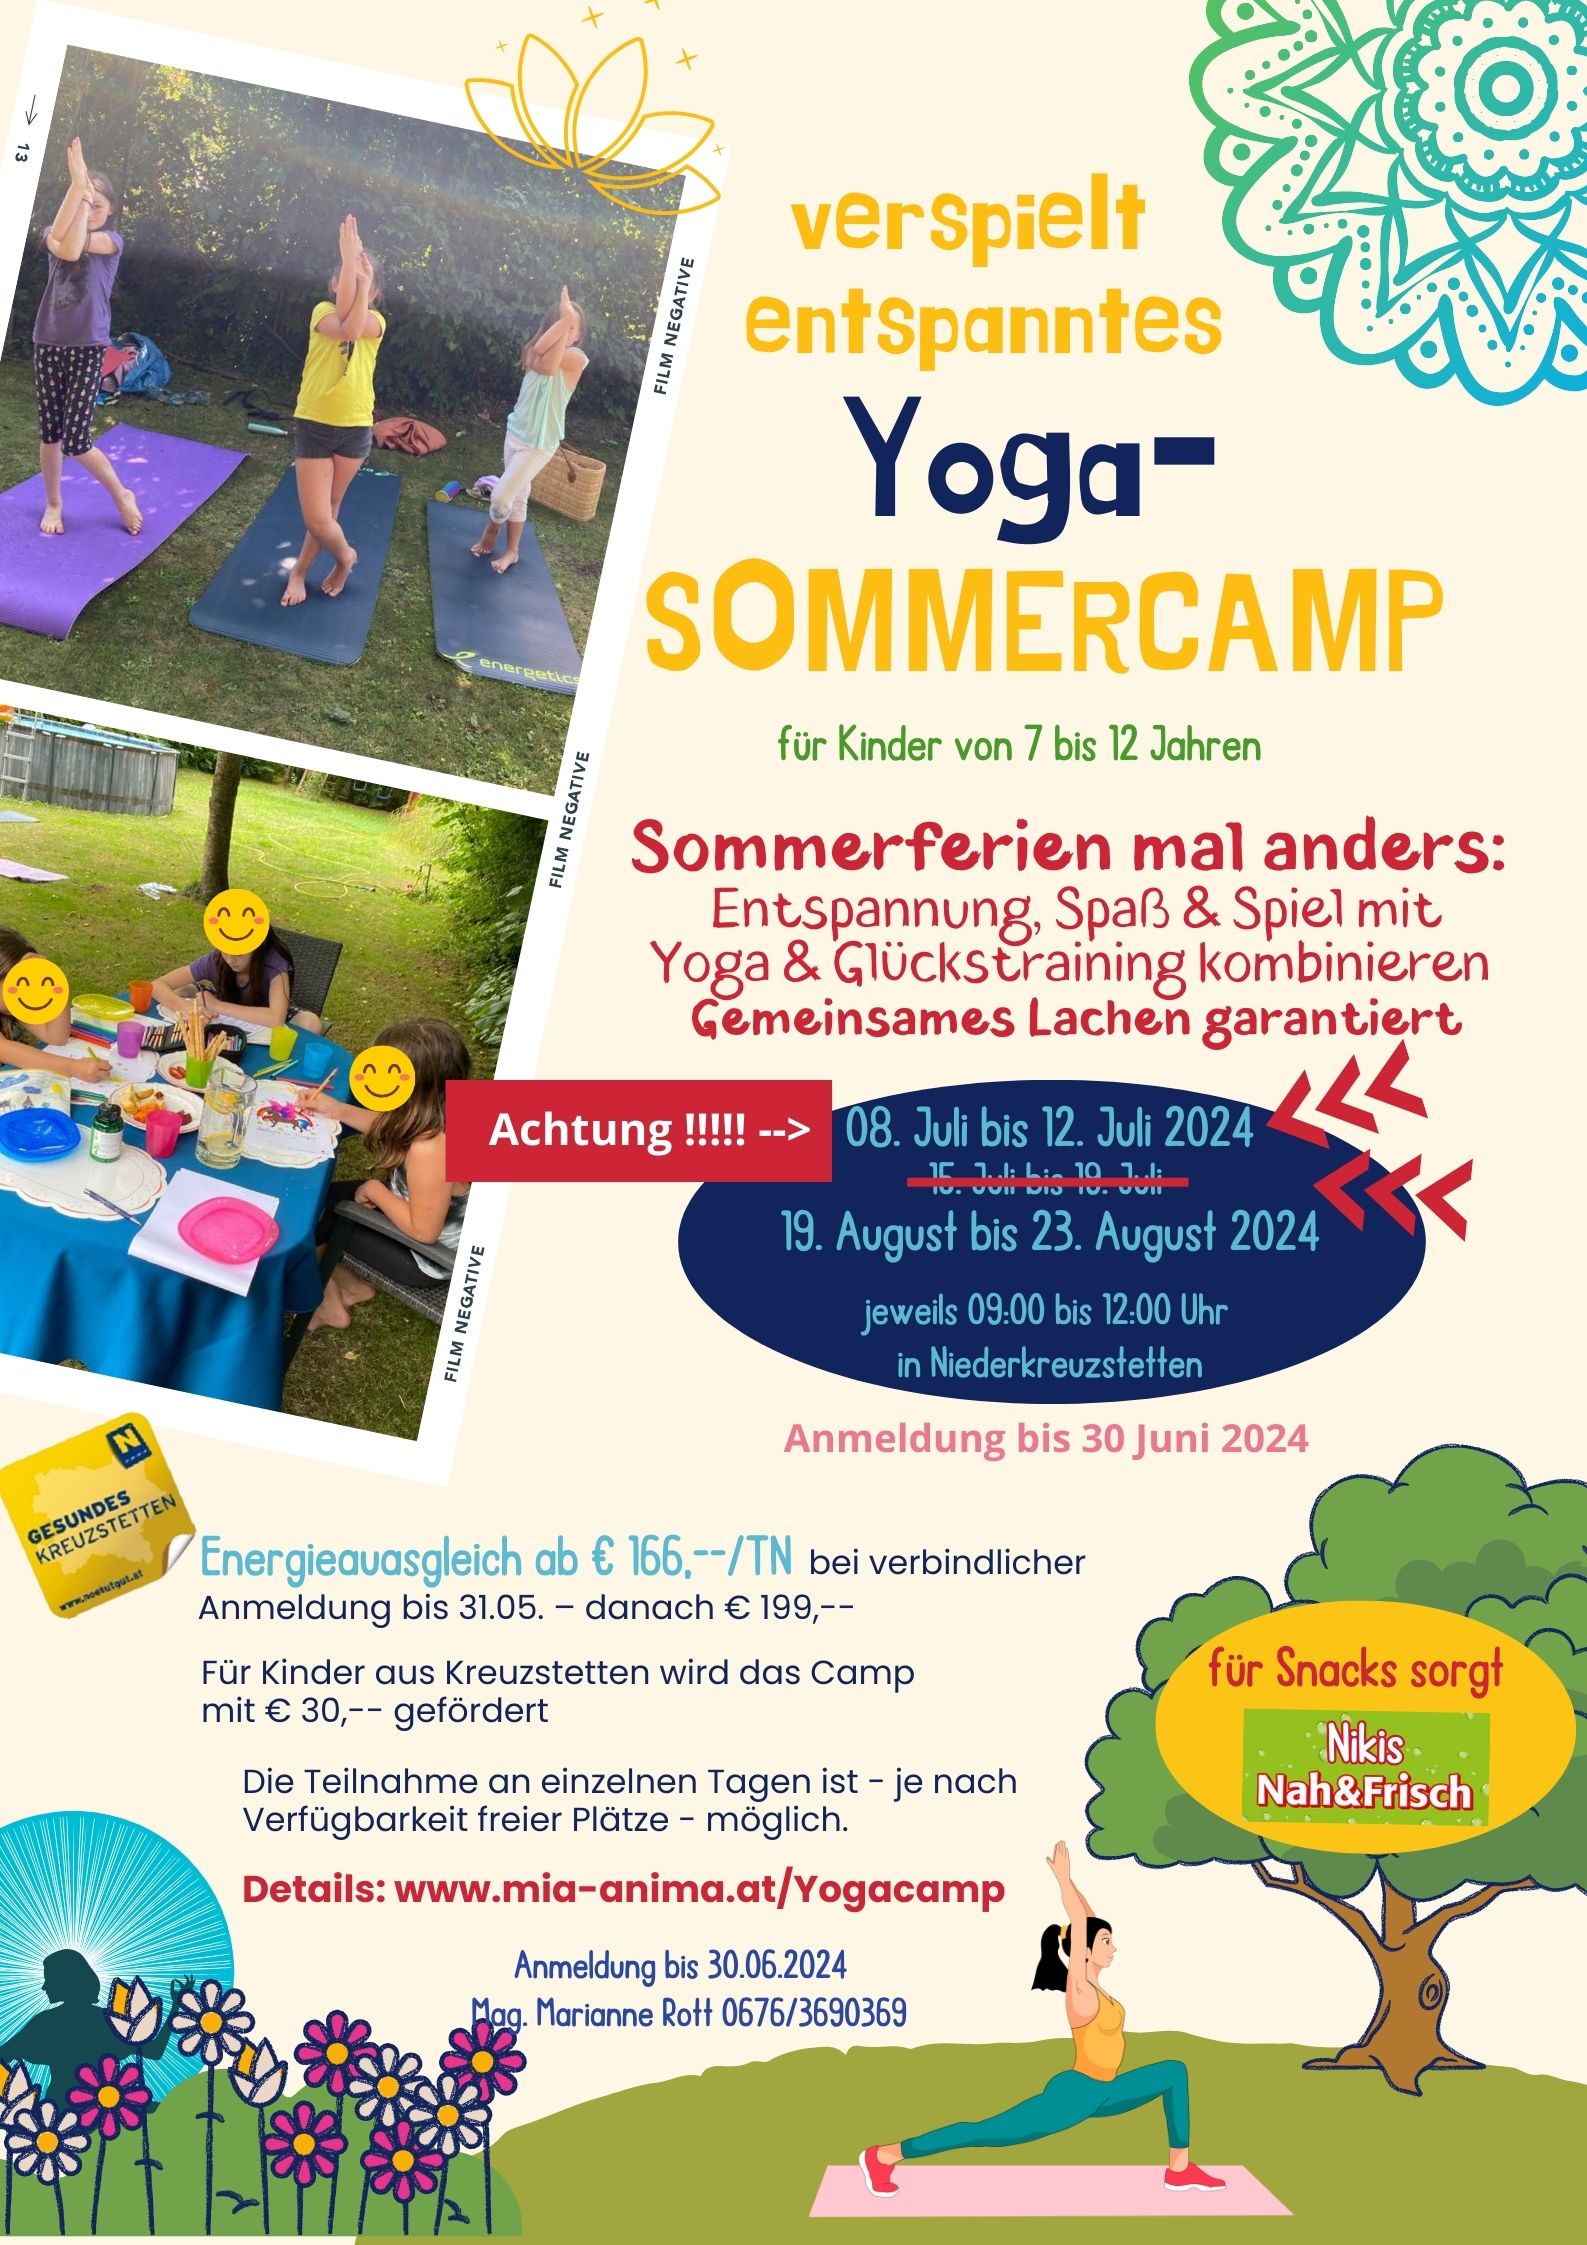 Plakat mit allen Infos zum Kinderyoga Sommercamp